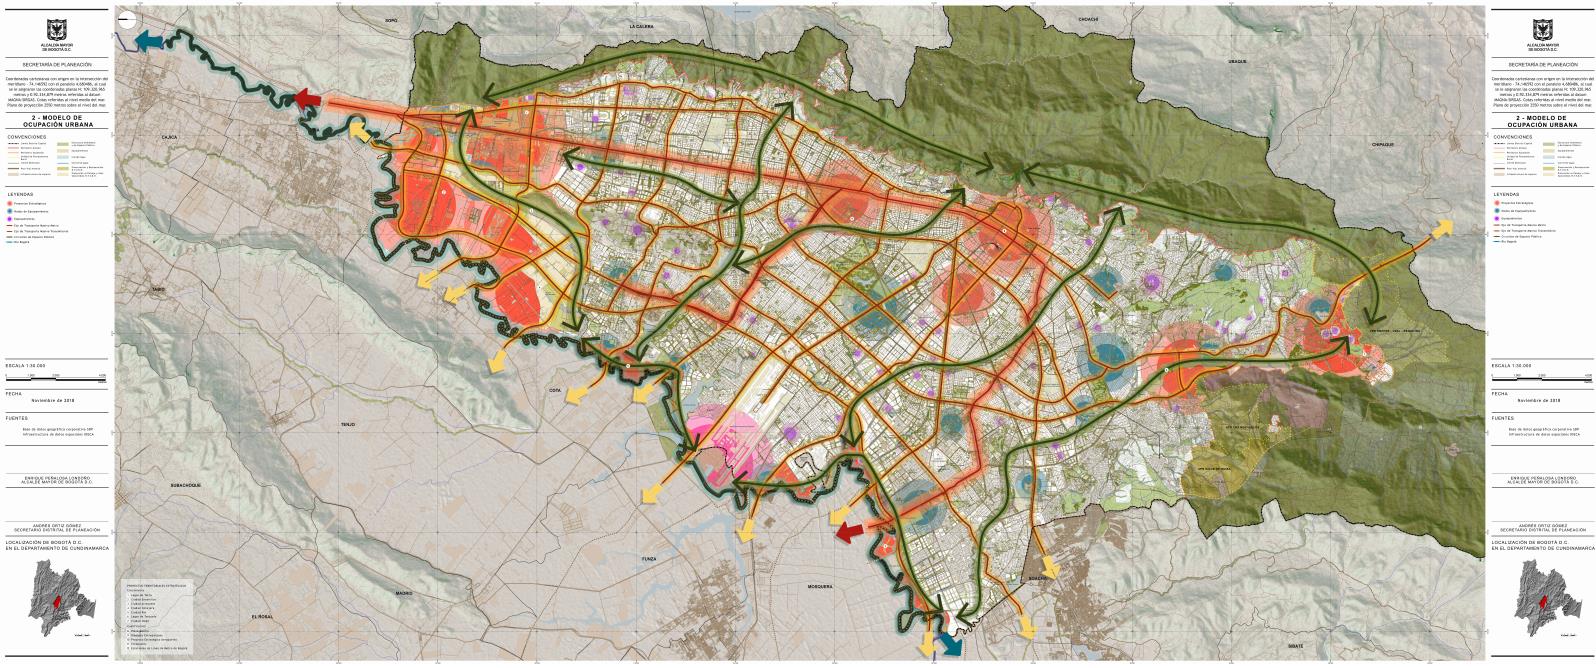 Modelo de ocupacion urbano Sec Distrital de Planeacion